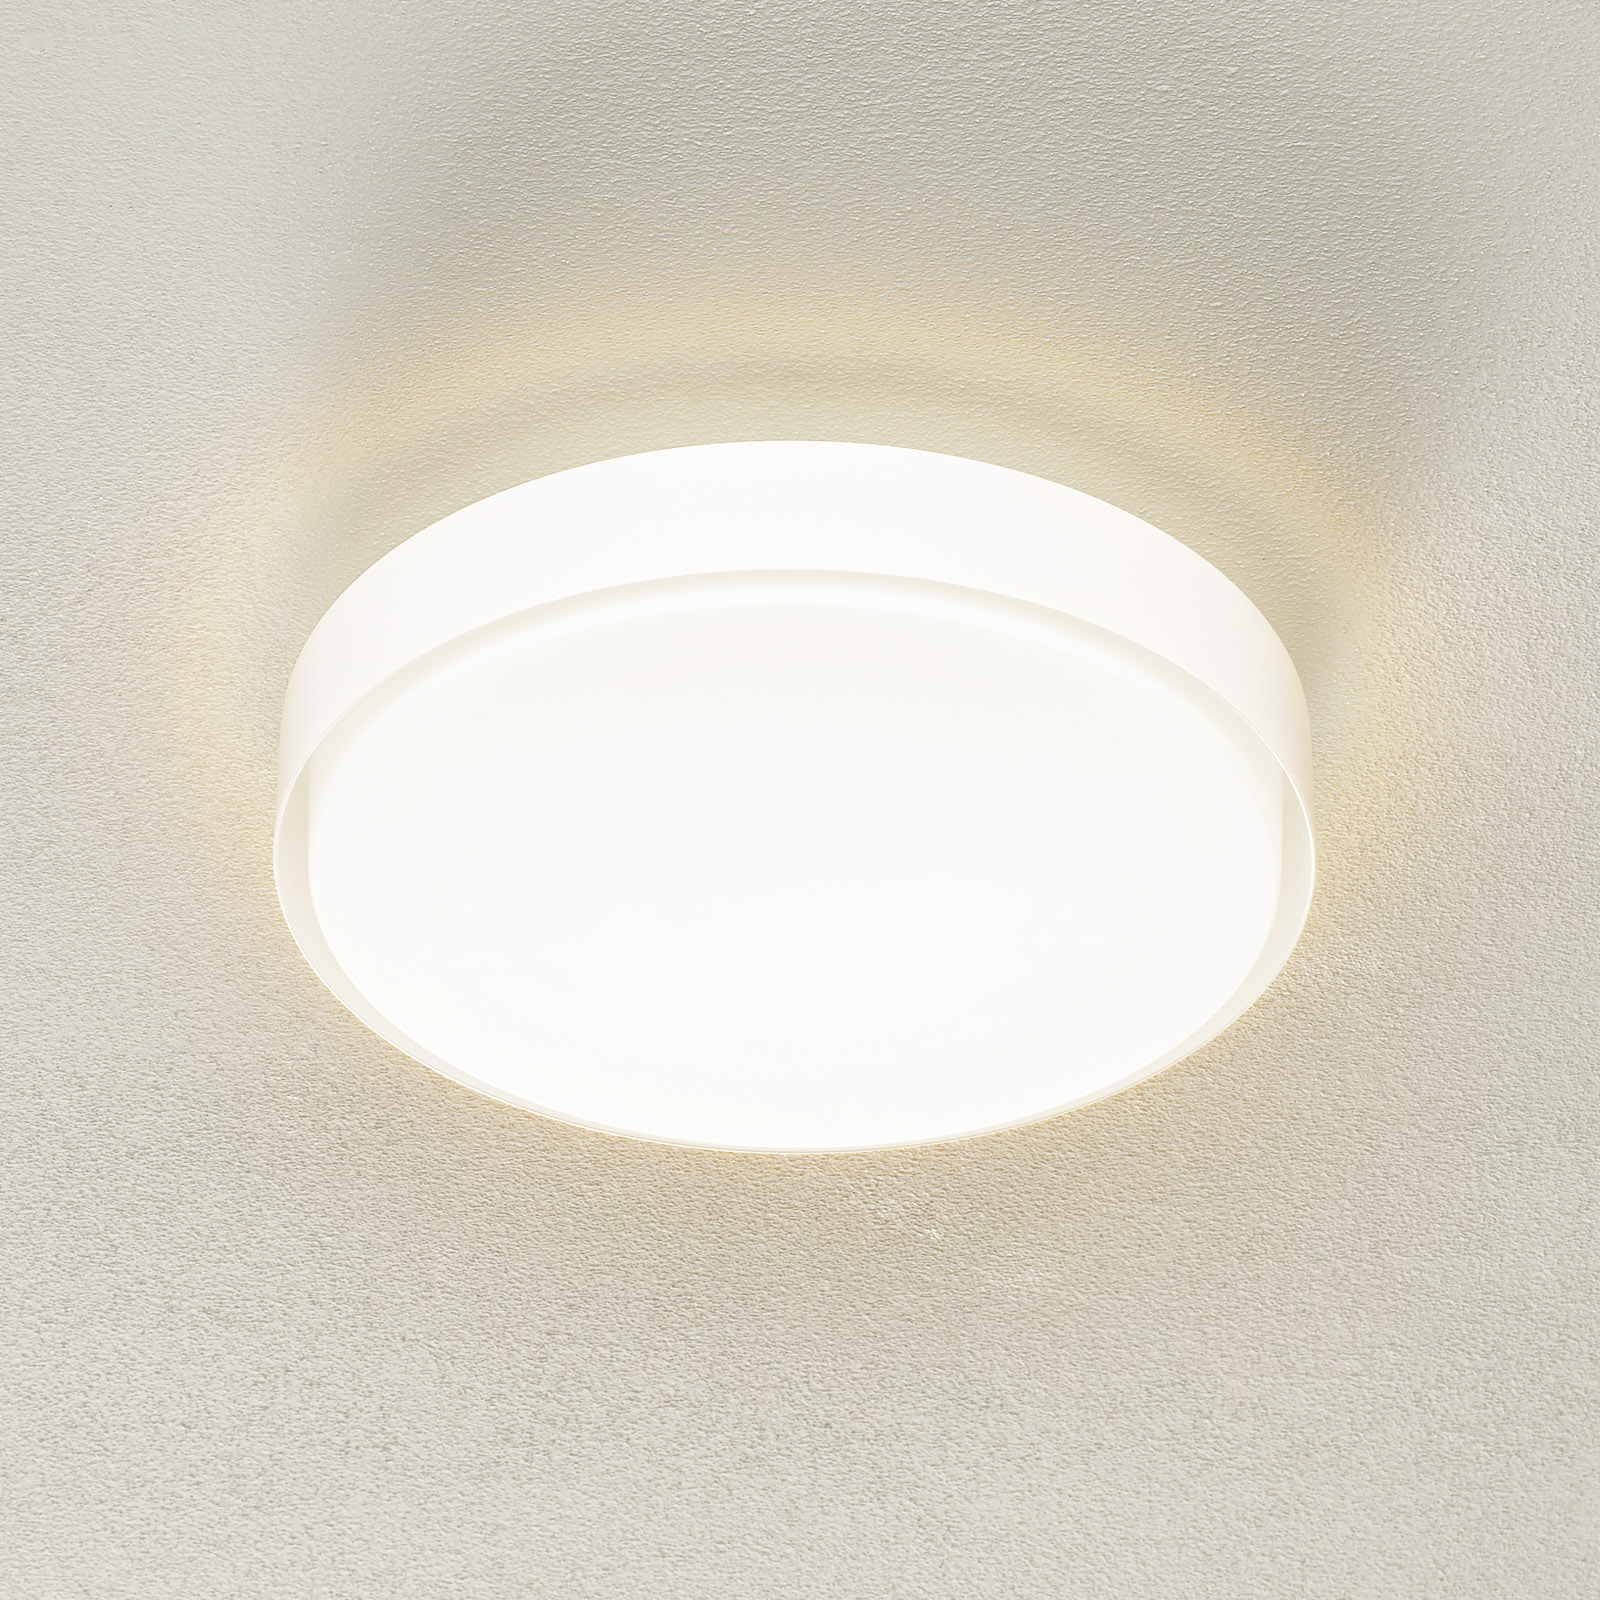 BEGA 34278 plafonnier LED, blanc, Ø 36 cm, DALI